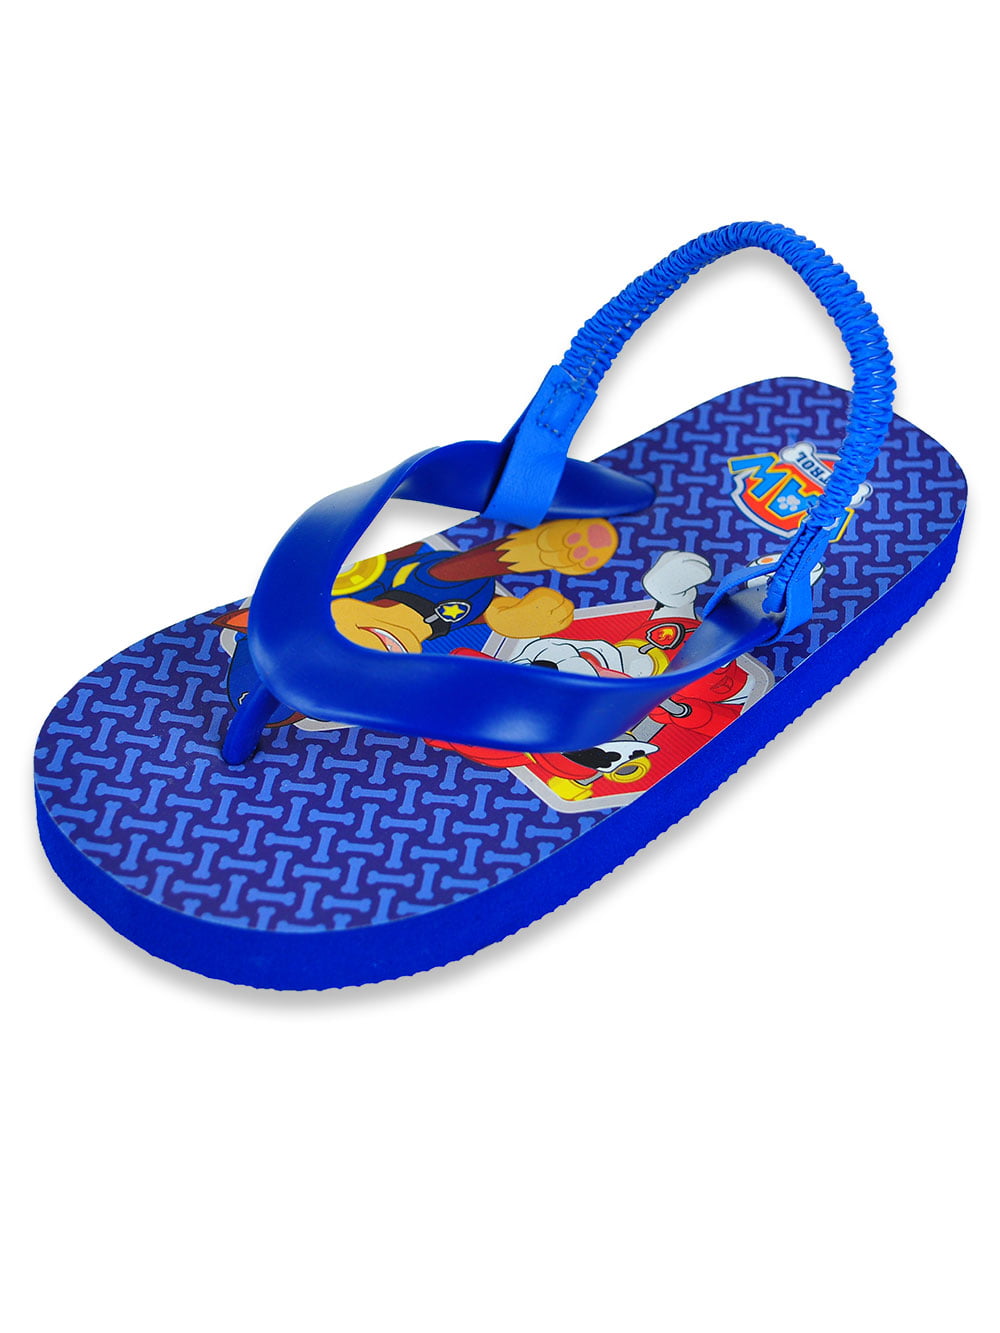 Toddler Boys PAW PATROL Size S 5/6  M 7/8  Shoes Flip Flops Sandals 